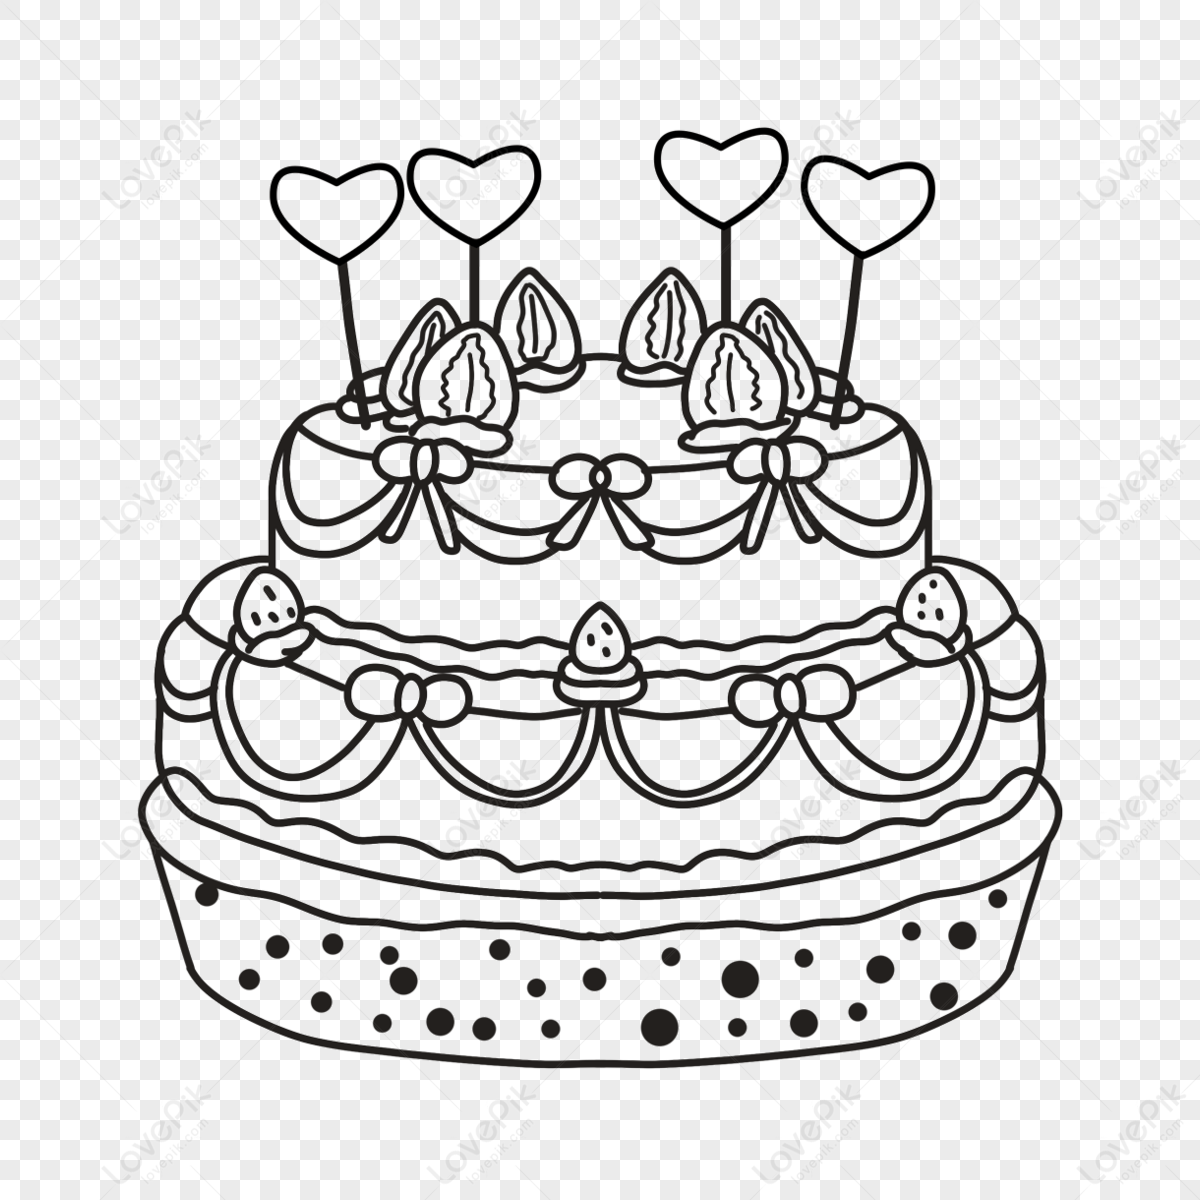 A big cake. Delicious sponge cake with whipped... - Stock Illustration  [88770514] - PIXTA